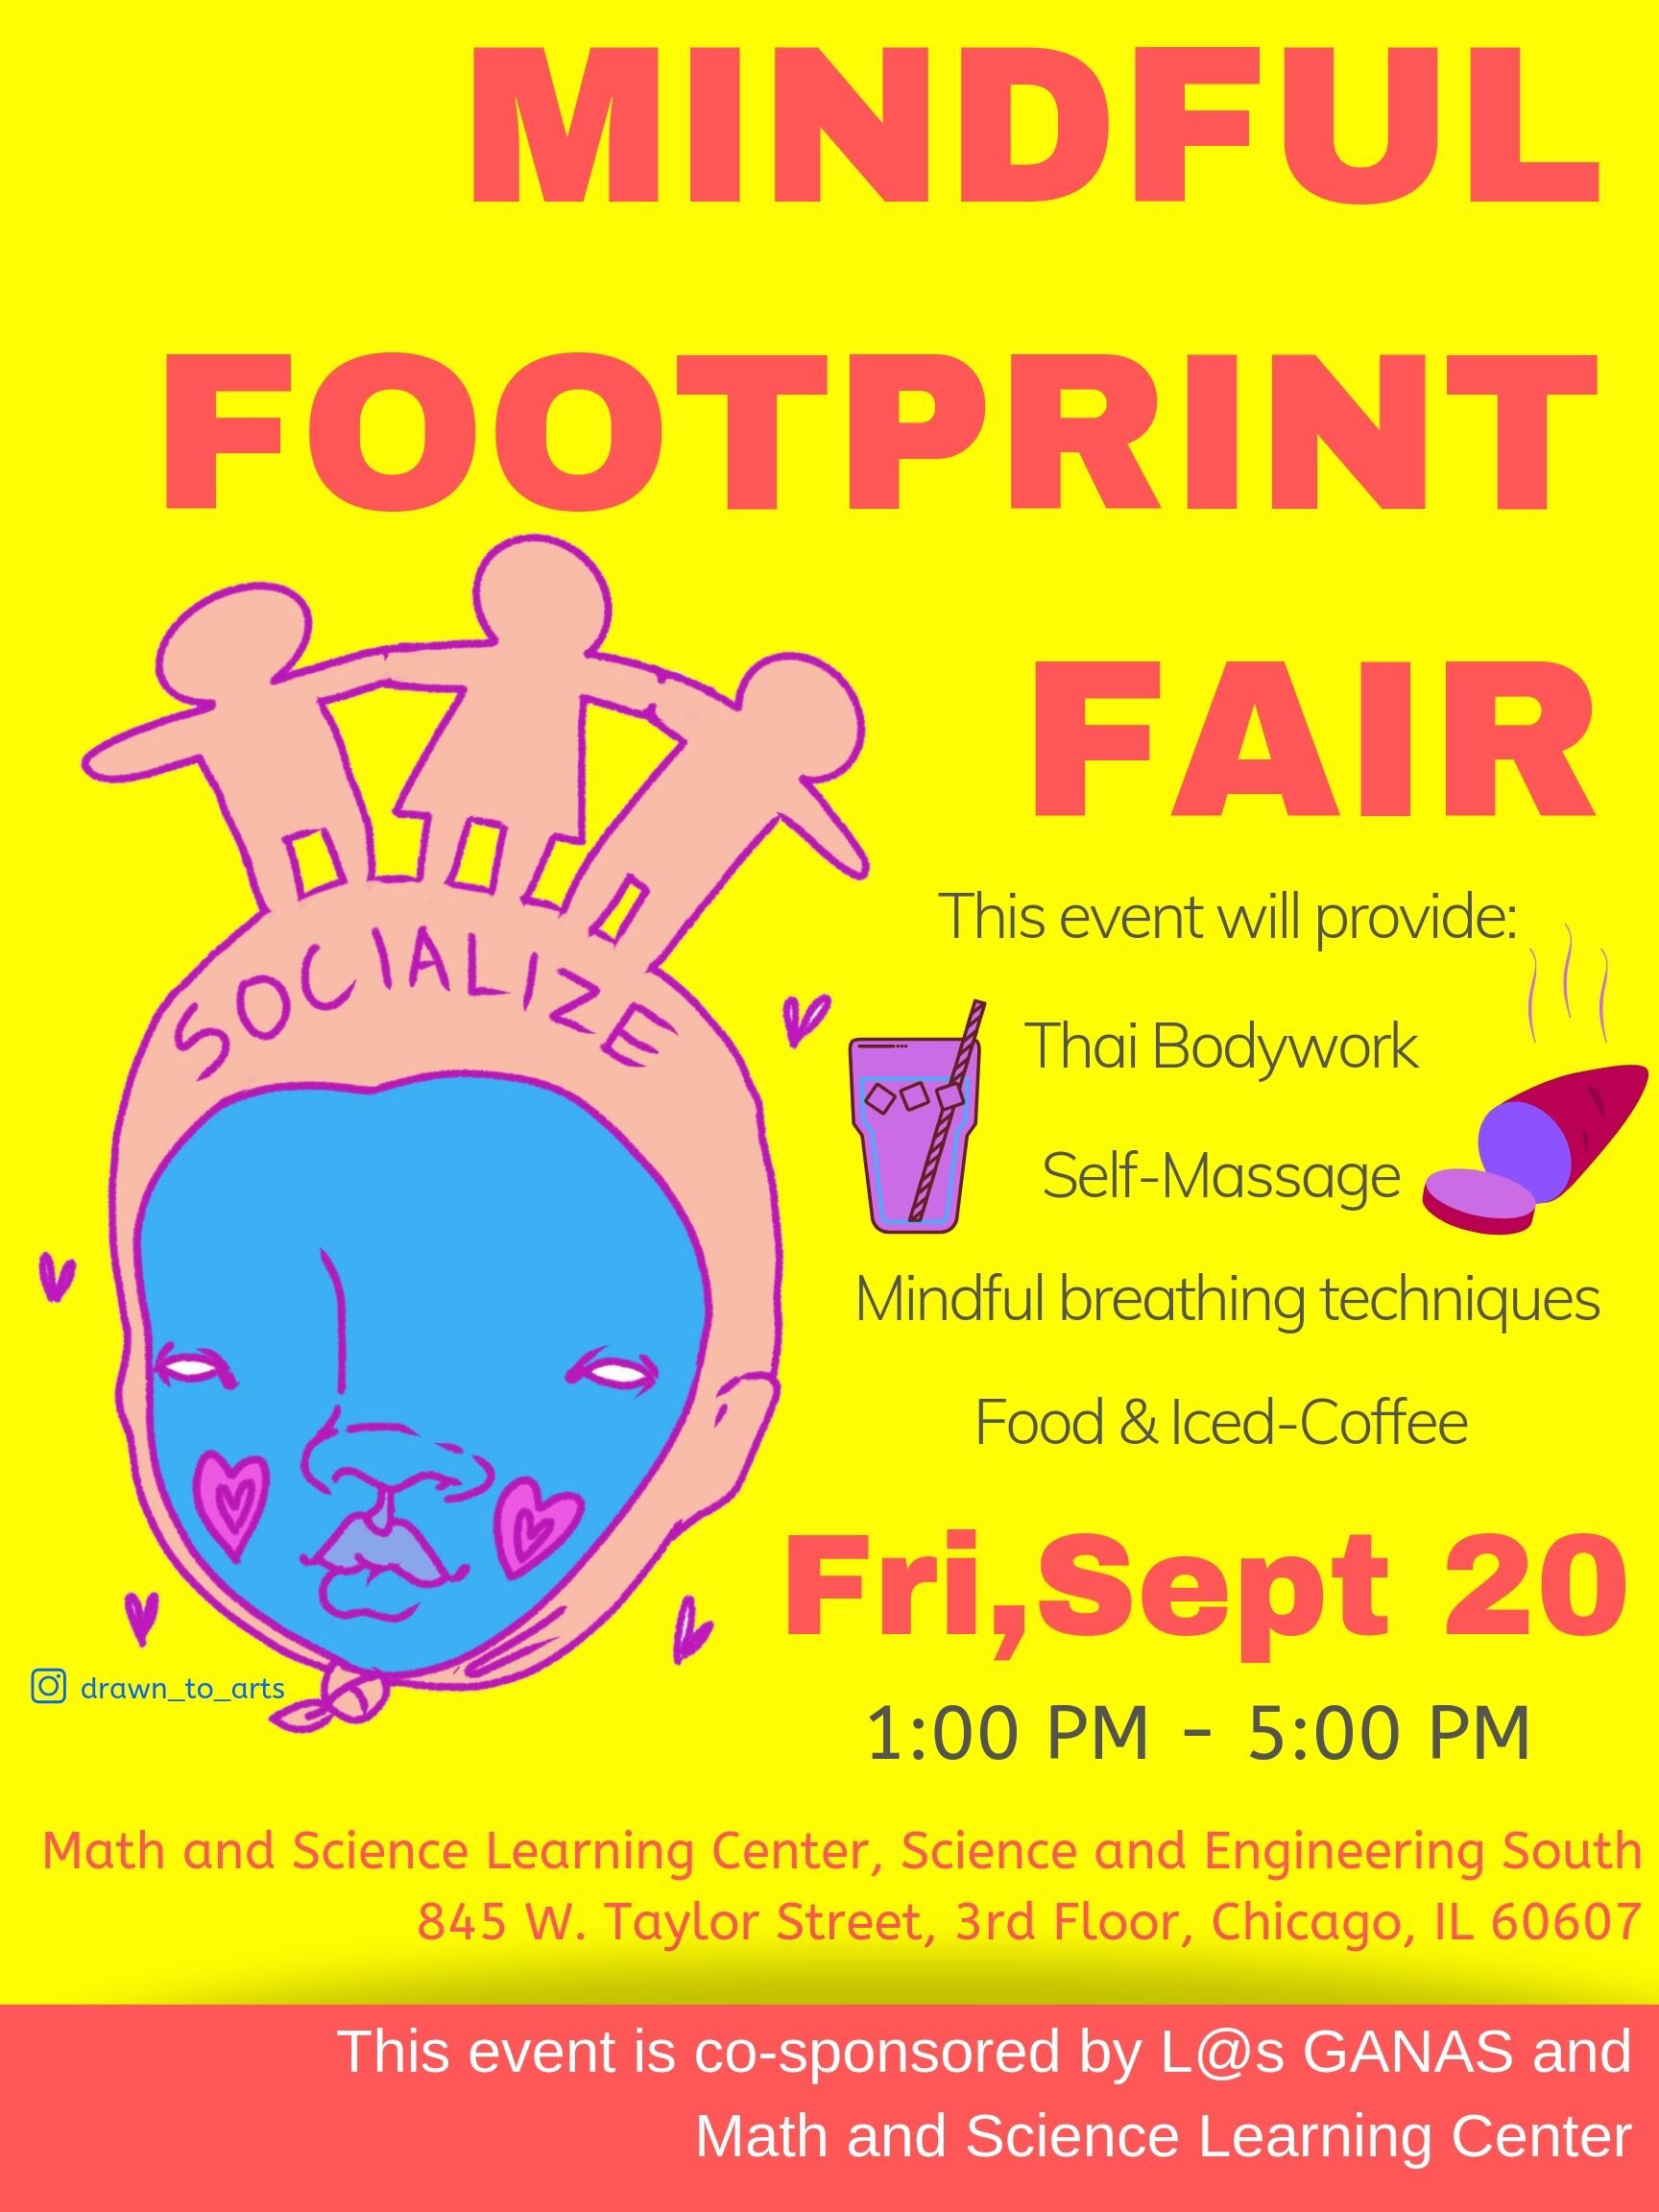 Mindful Footprint Fair